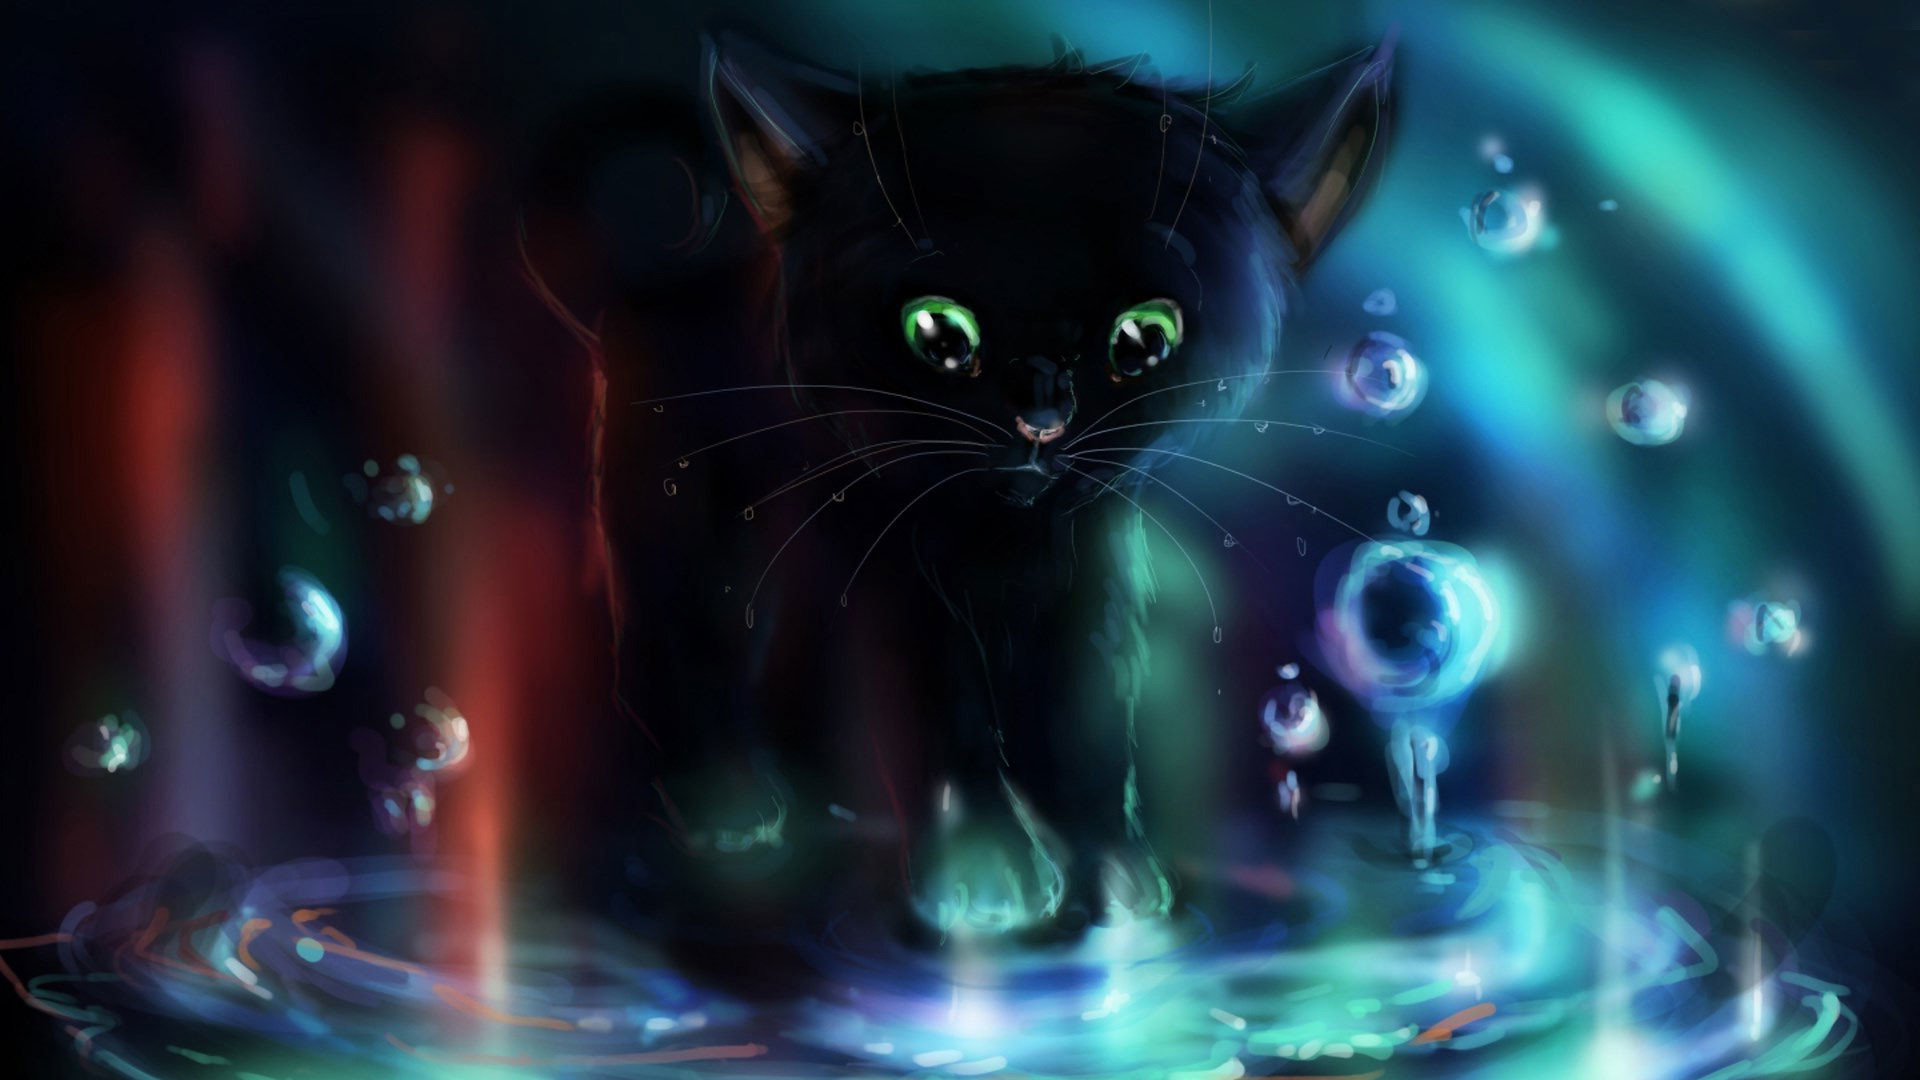 Hd pics photos attractive black cat water 2d animated cartoon hd quality desktop background wallpaper